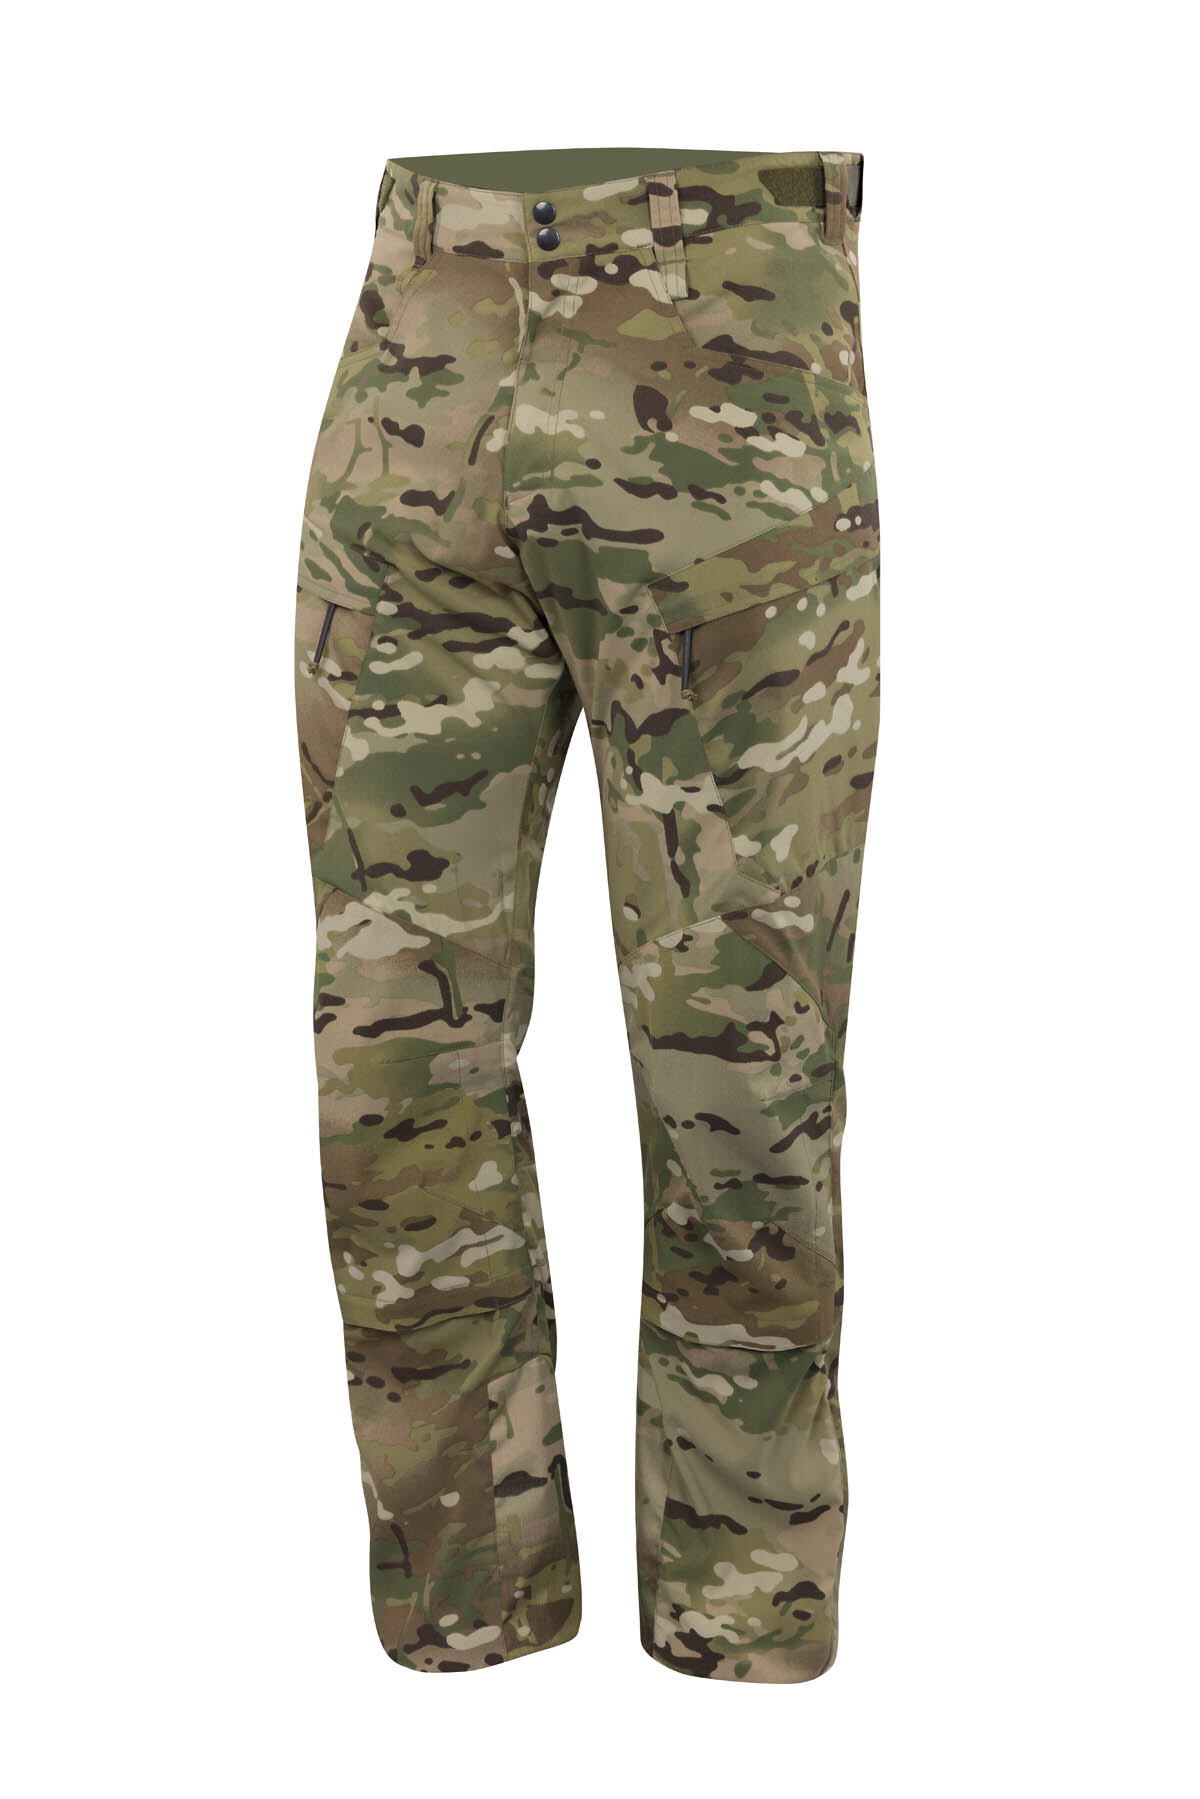 Softshellové kalhoty Operator Tilak Military Gear® – Multicam® (Barva: Multicam®, Velikost: L)